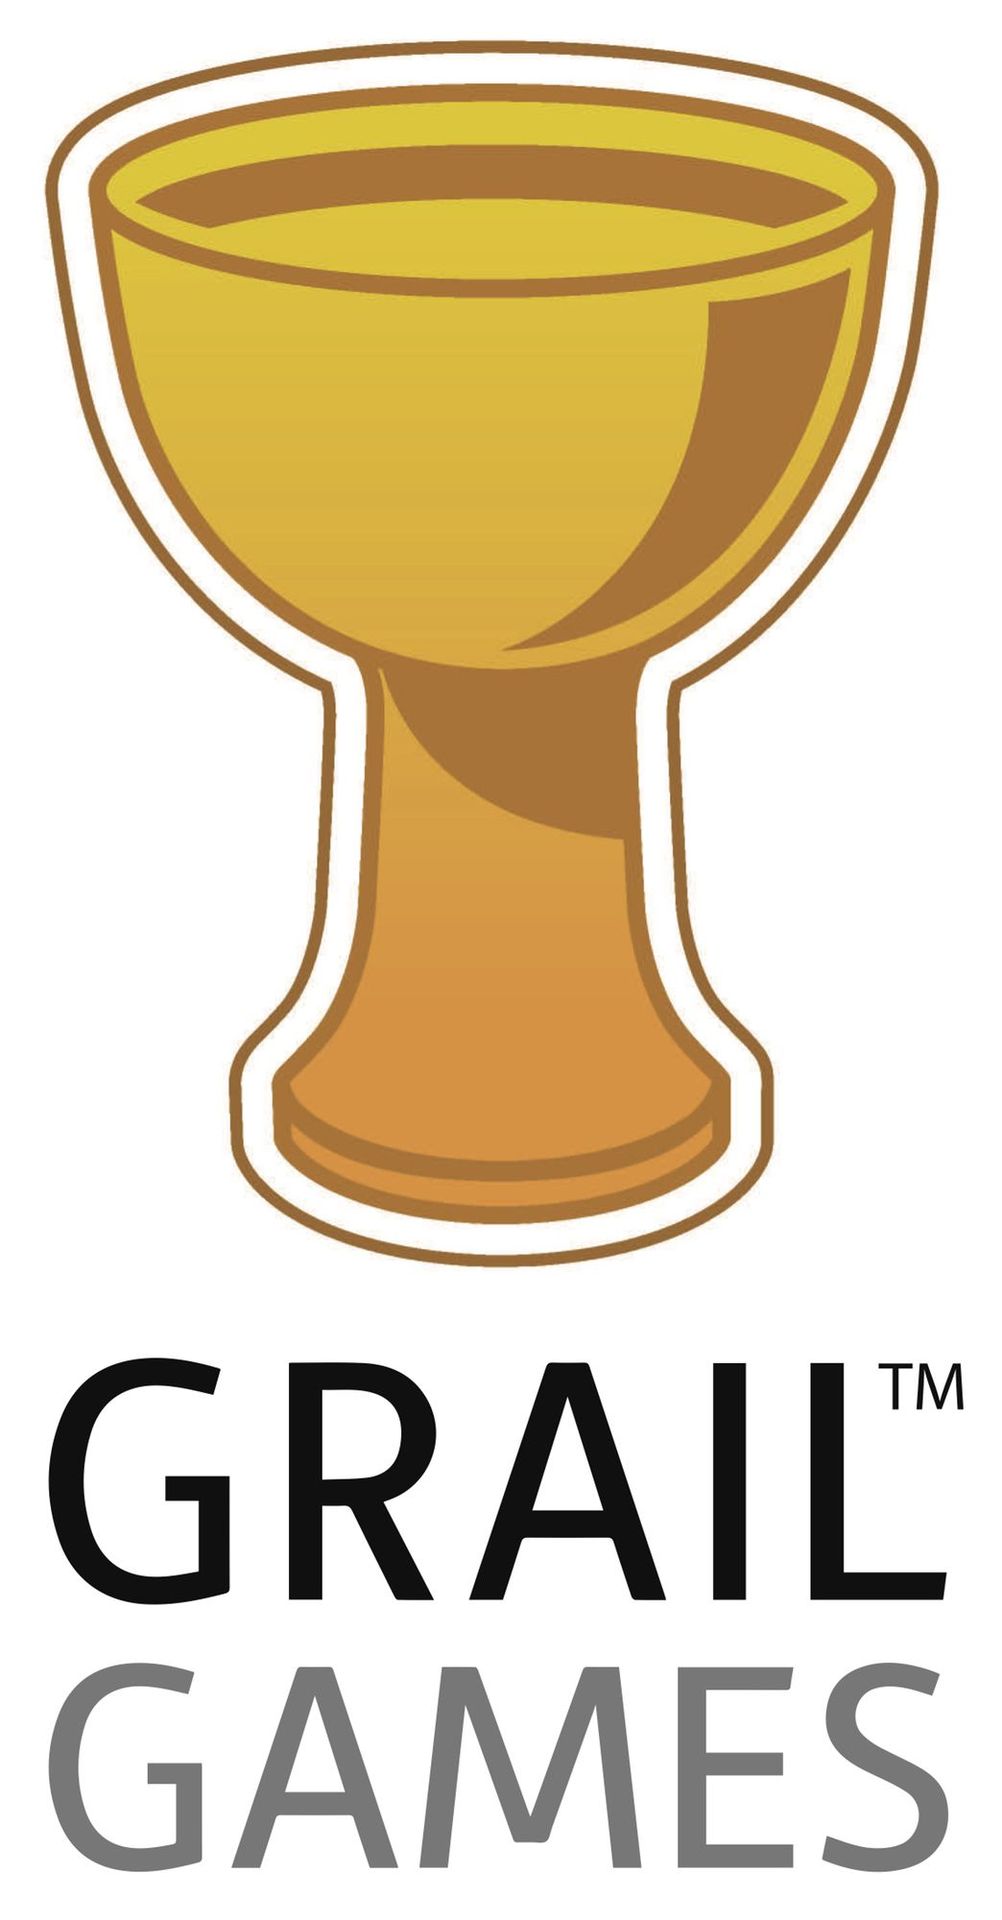 Brand: Grail Games